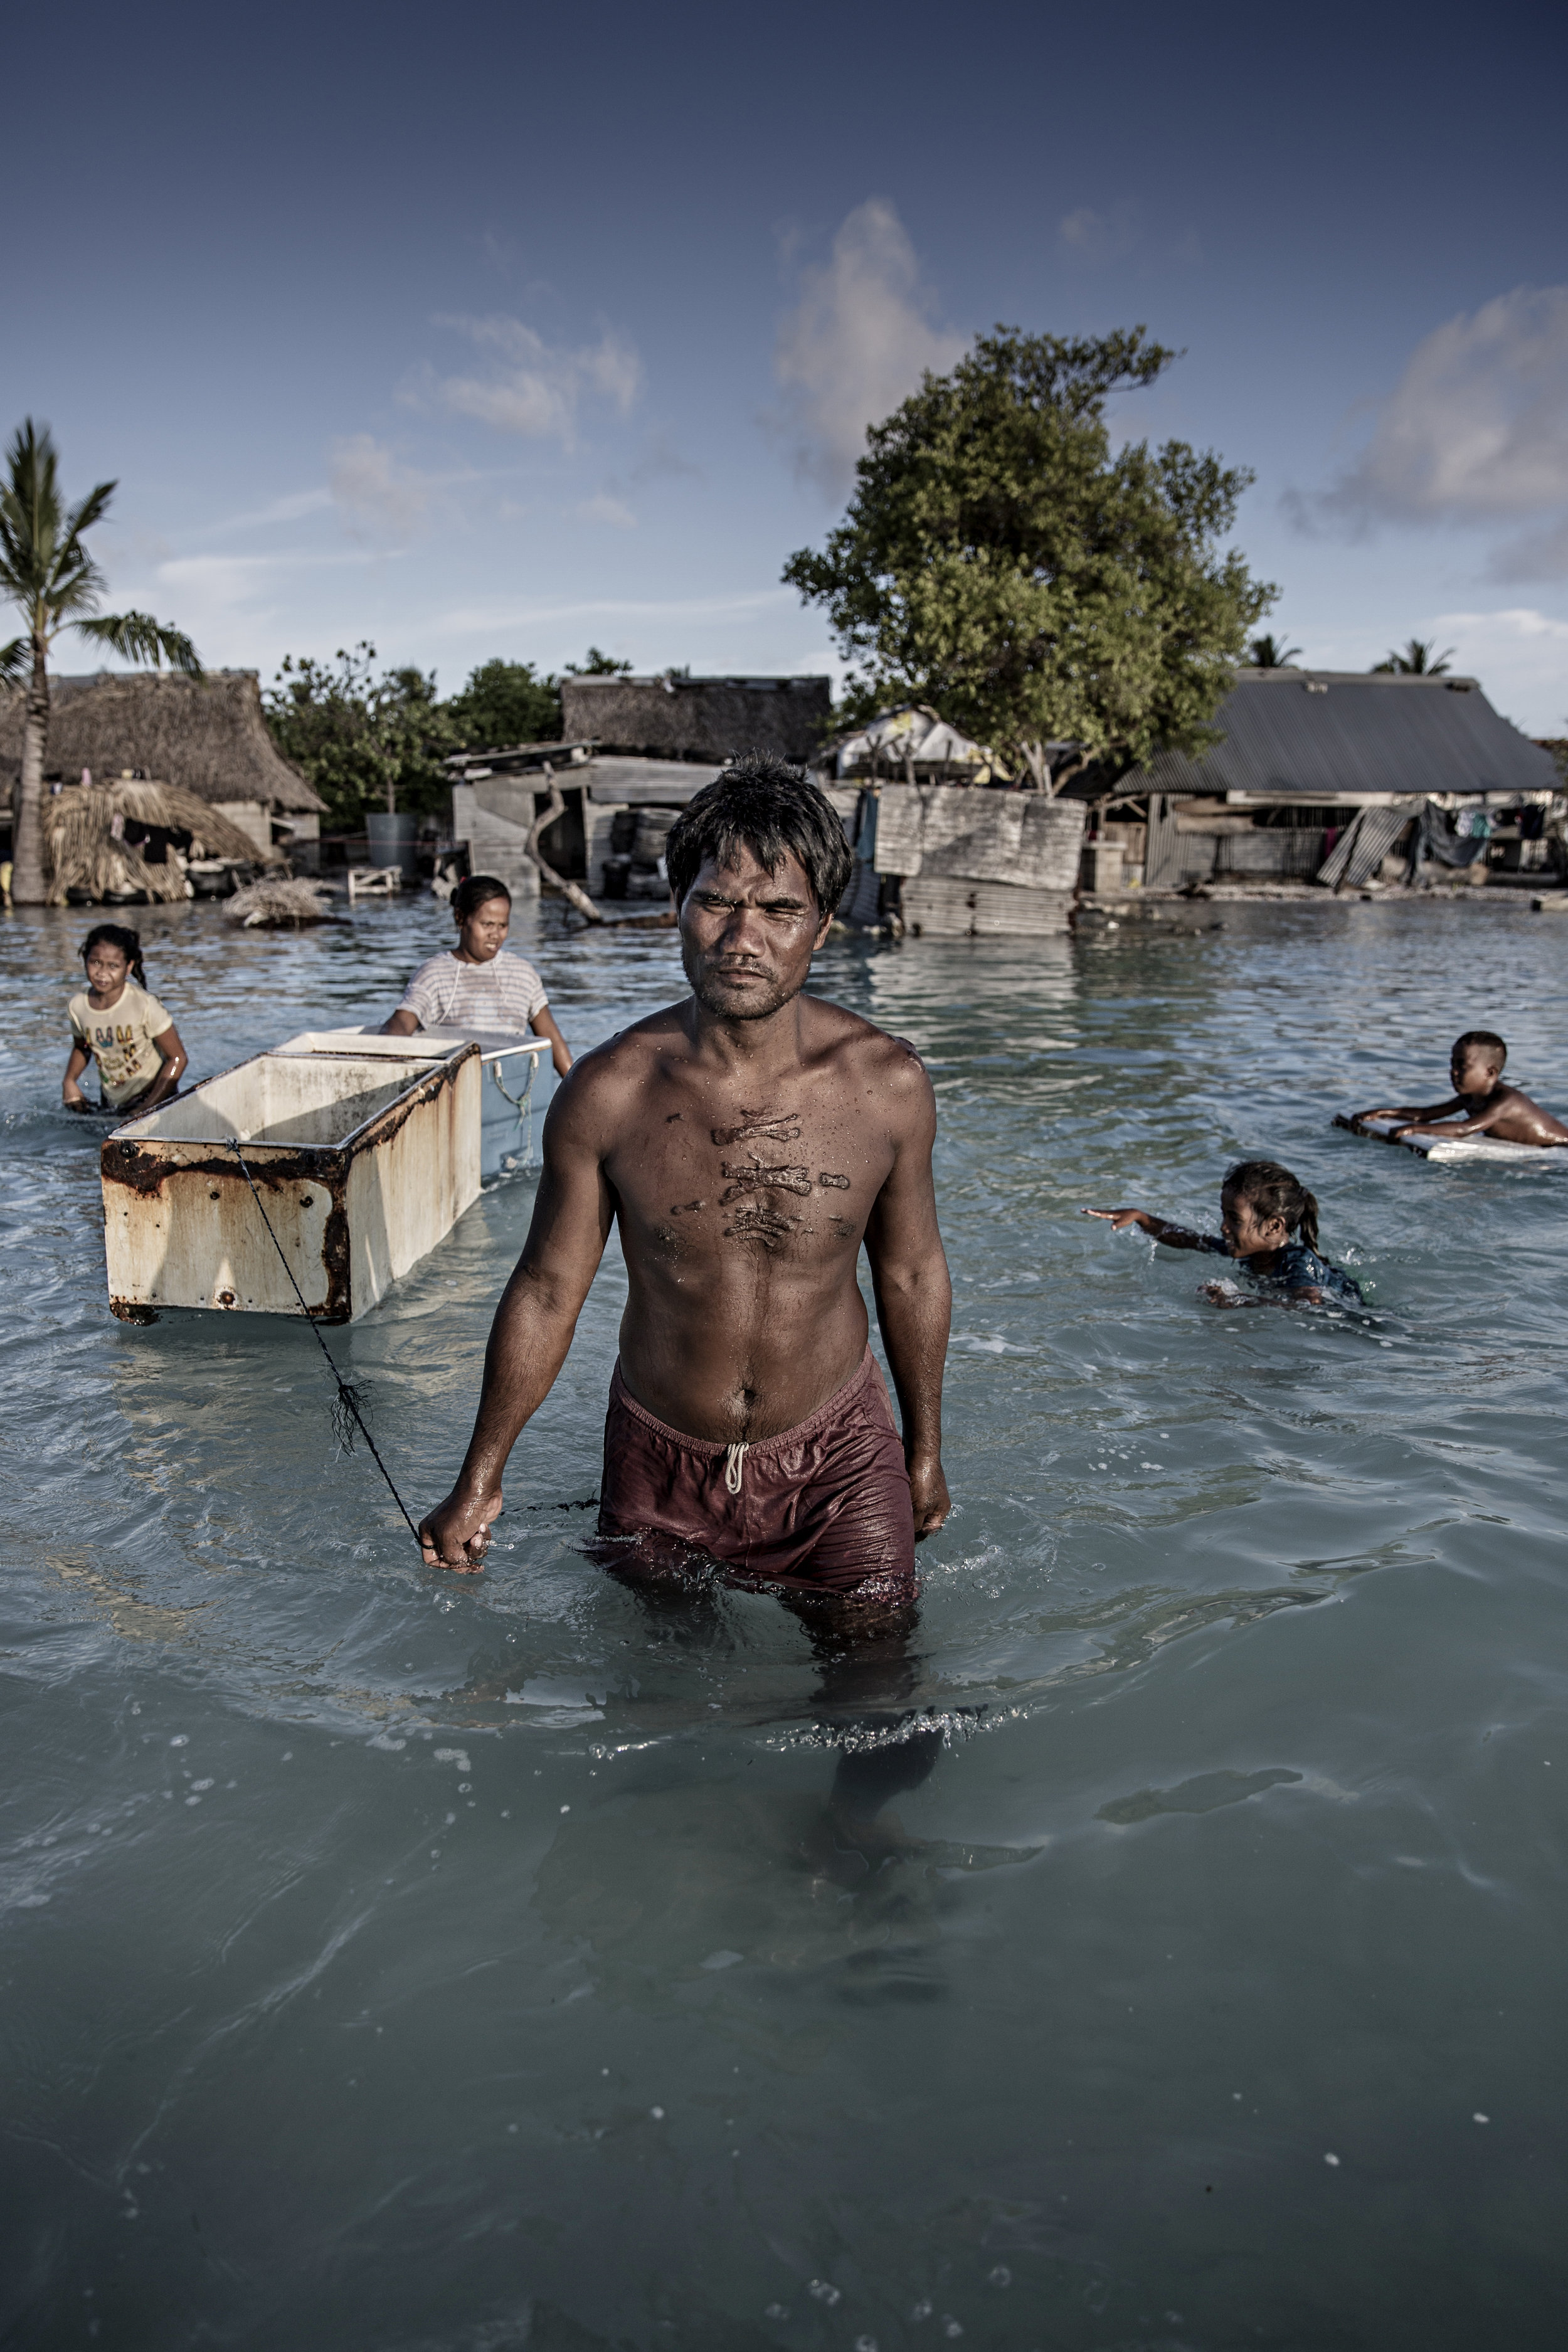  The sea floods the land / Kiribati - 2015 